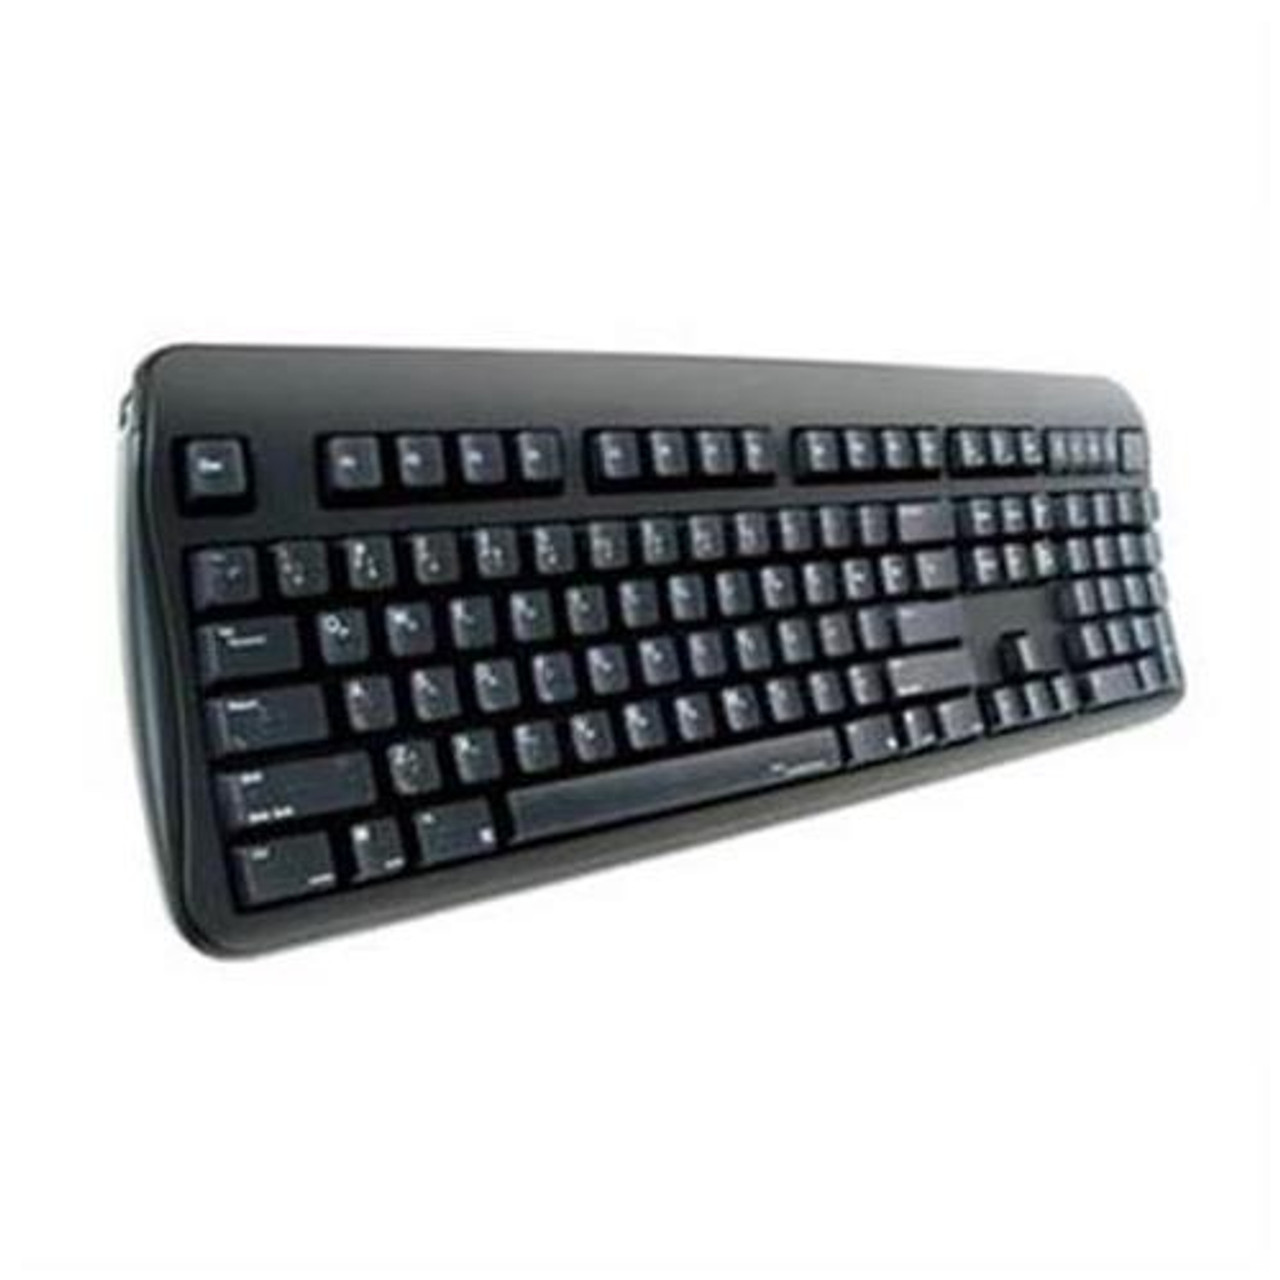 320-1366 - Sun USB Keyboard Type-7 (US)